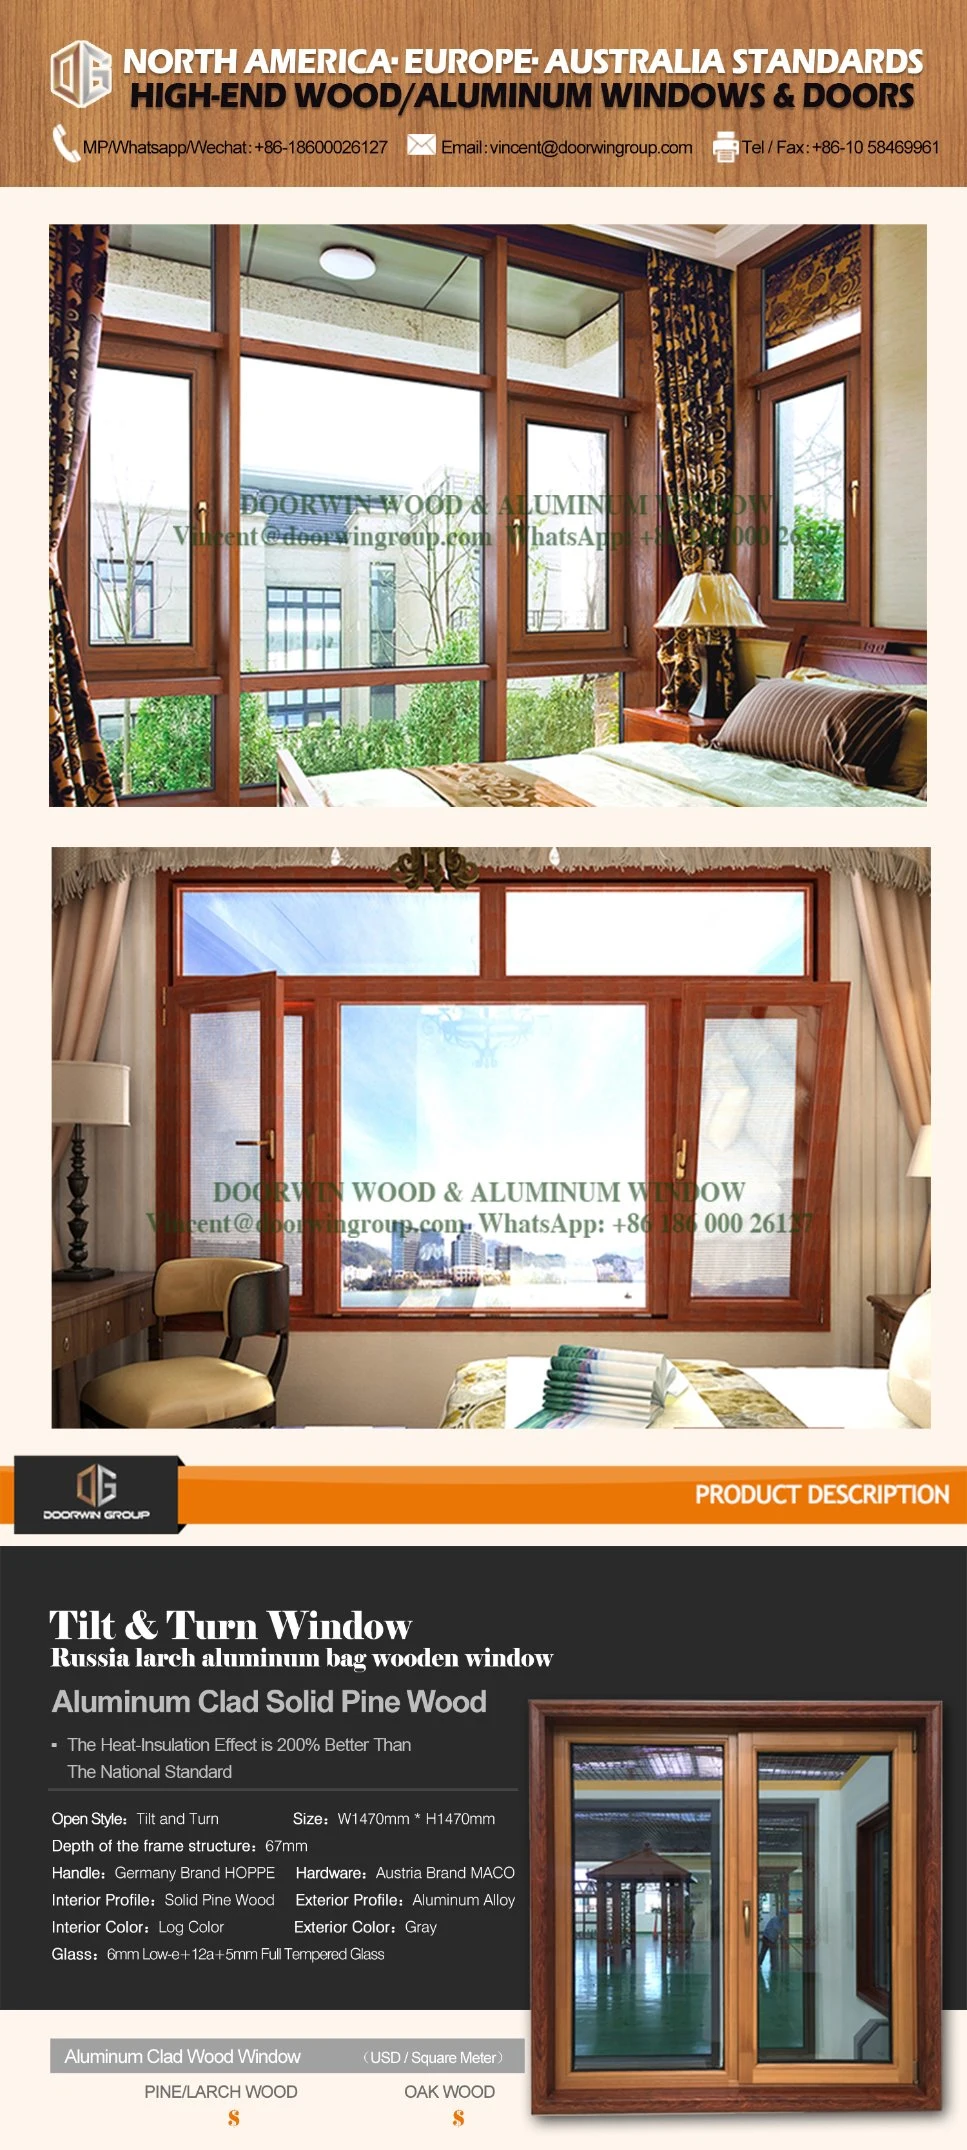 Russia Larch Aluminum Bag Wooden Window, Aluminum Clad Solid Pine Wood Tilt & Turn Window Casement Window